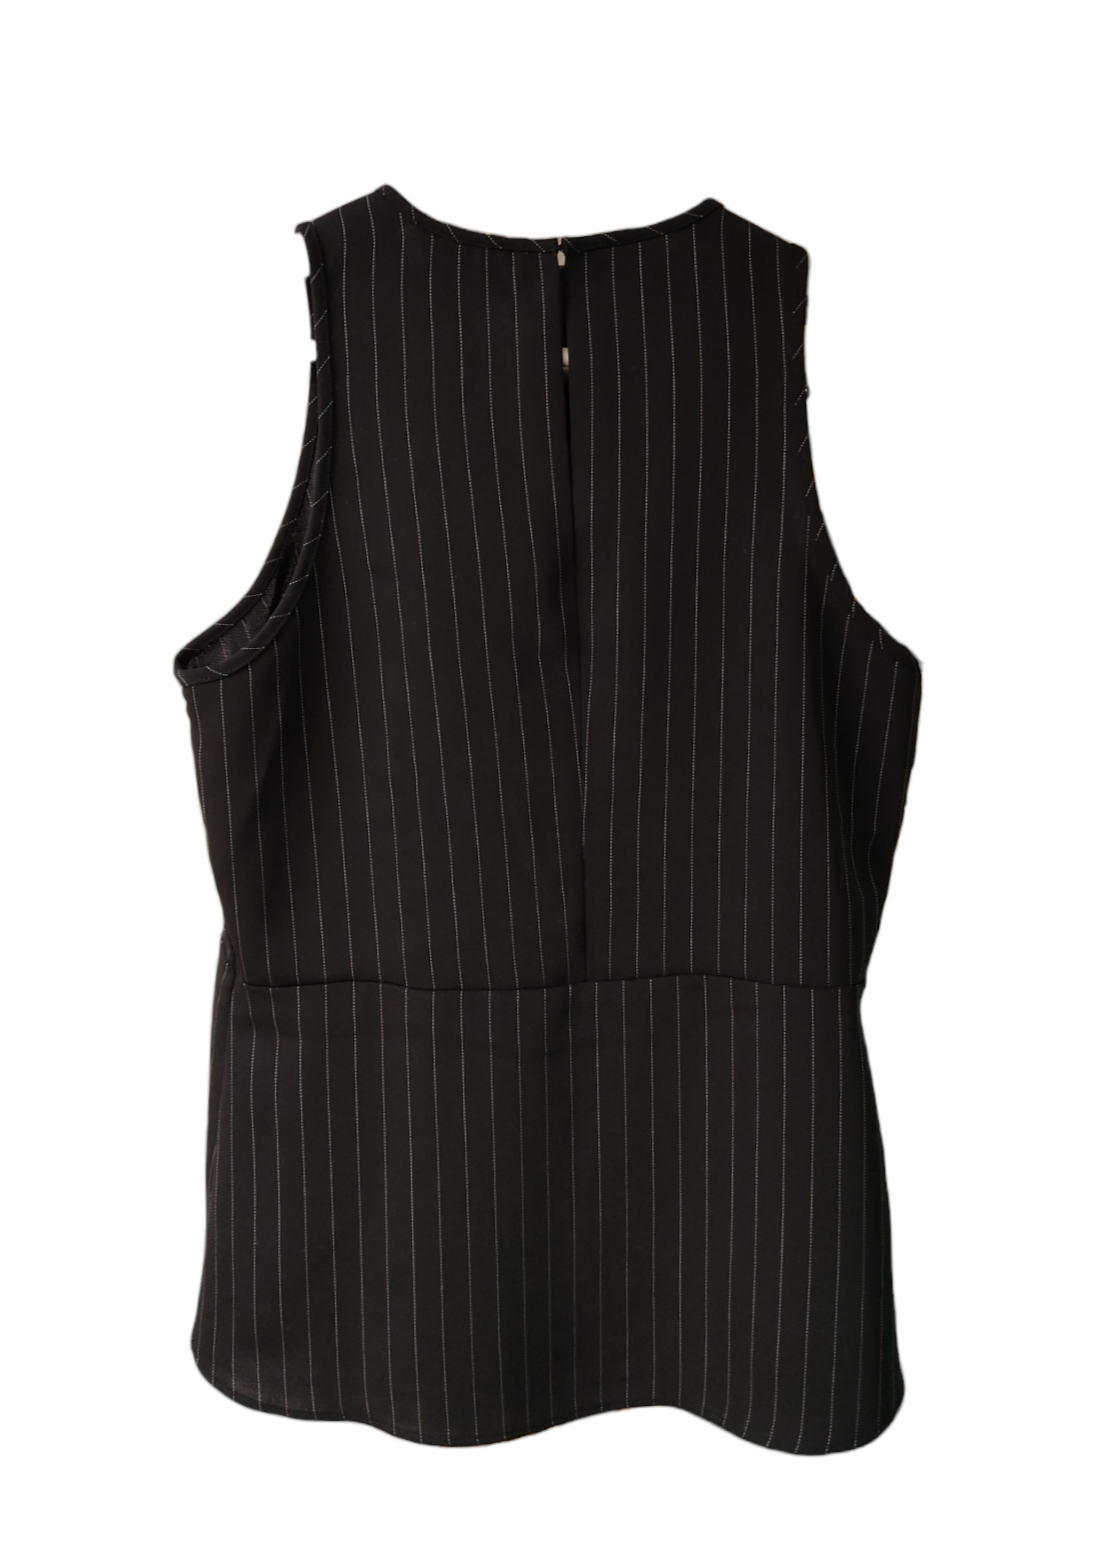 Premium Branded Ριγέ Γυναικεία Μπλούζα σε Μαύρο Χρώμα (Small)